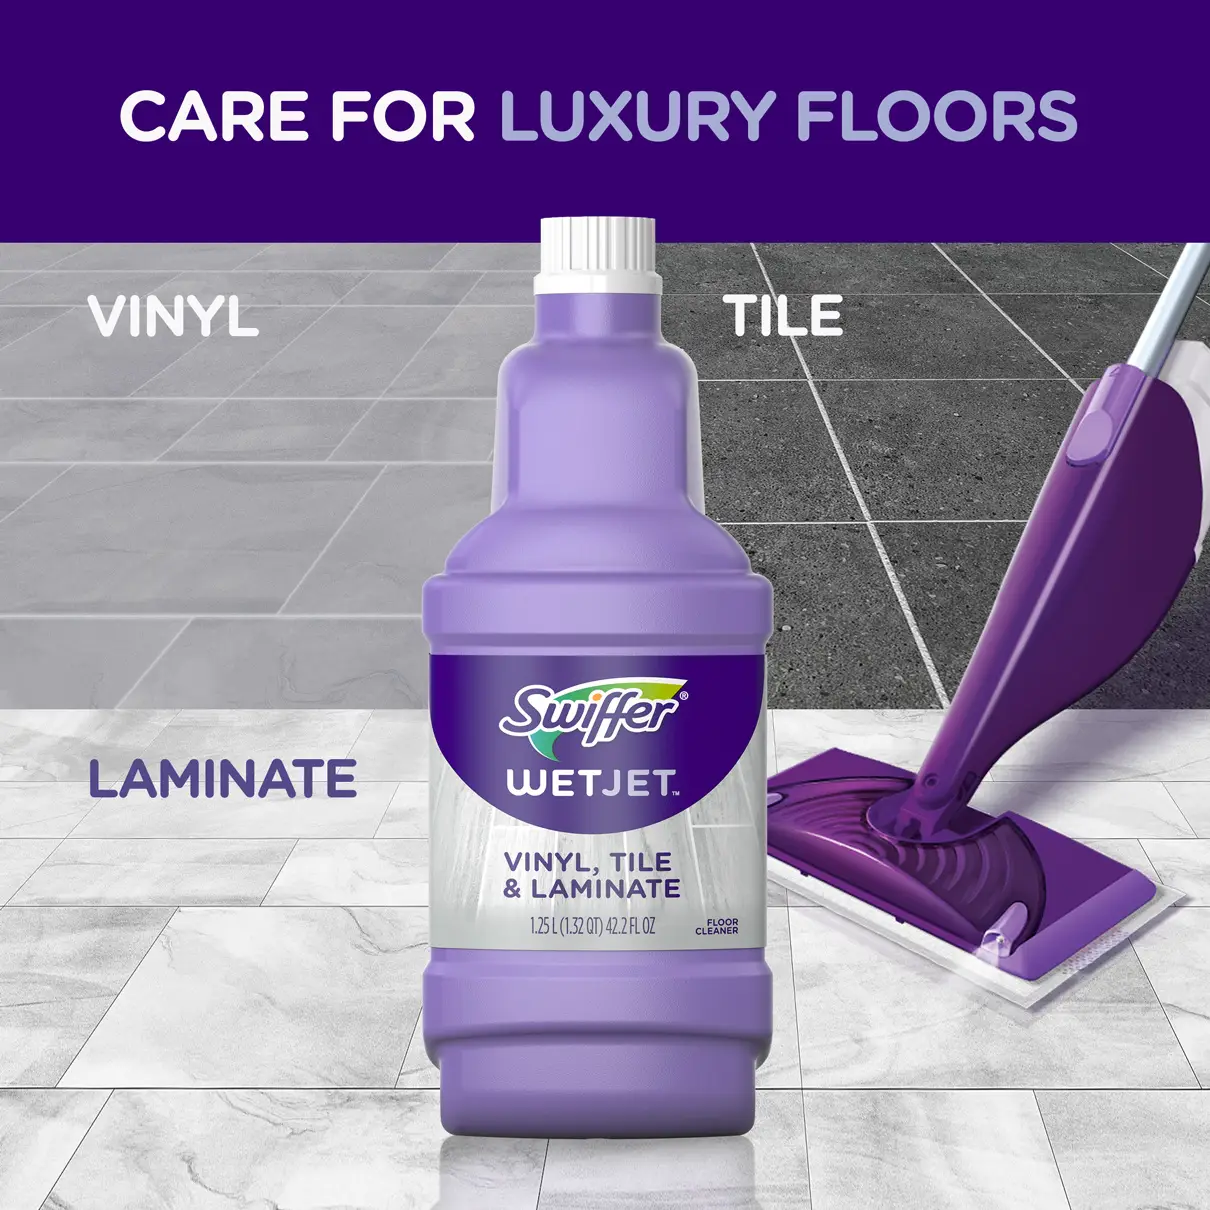 Shaw Floors Hard Surface Floor Cleaner for Ceramic Laminate Hardwood and Luxury Vinyl 32 fl oz Spray